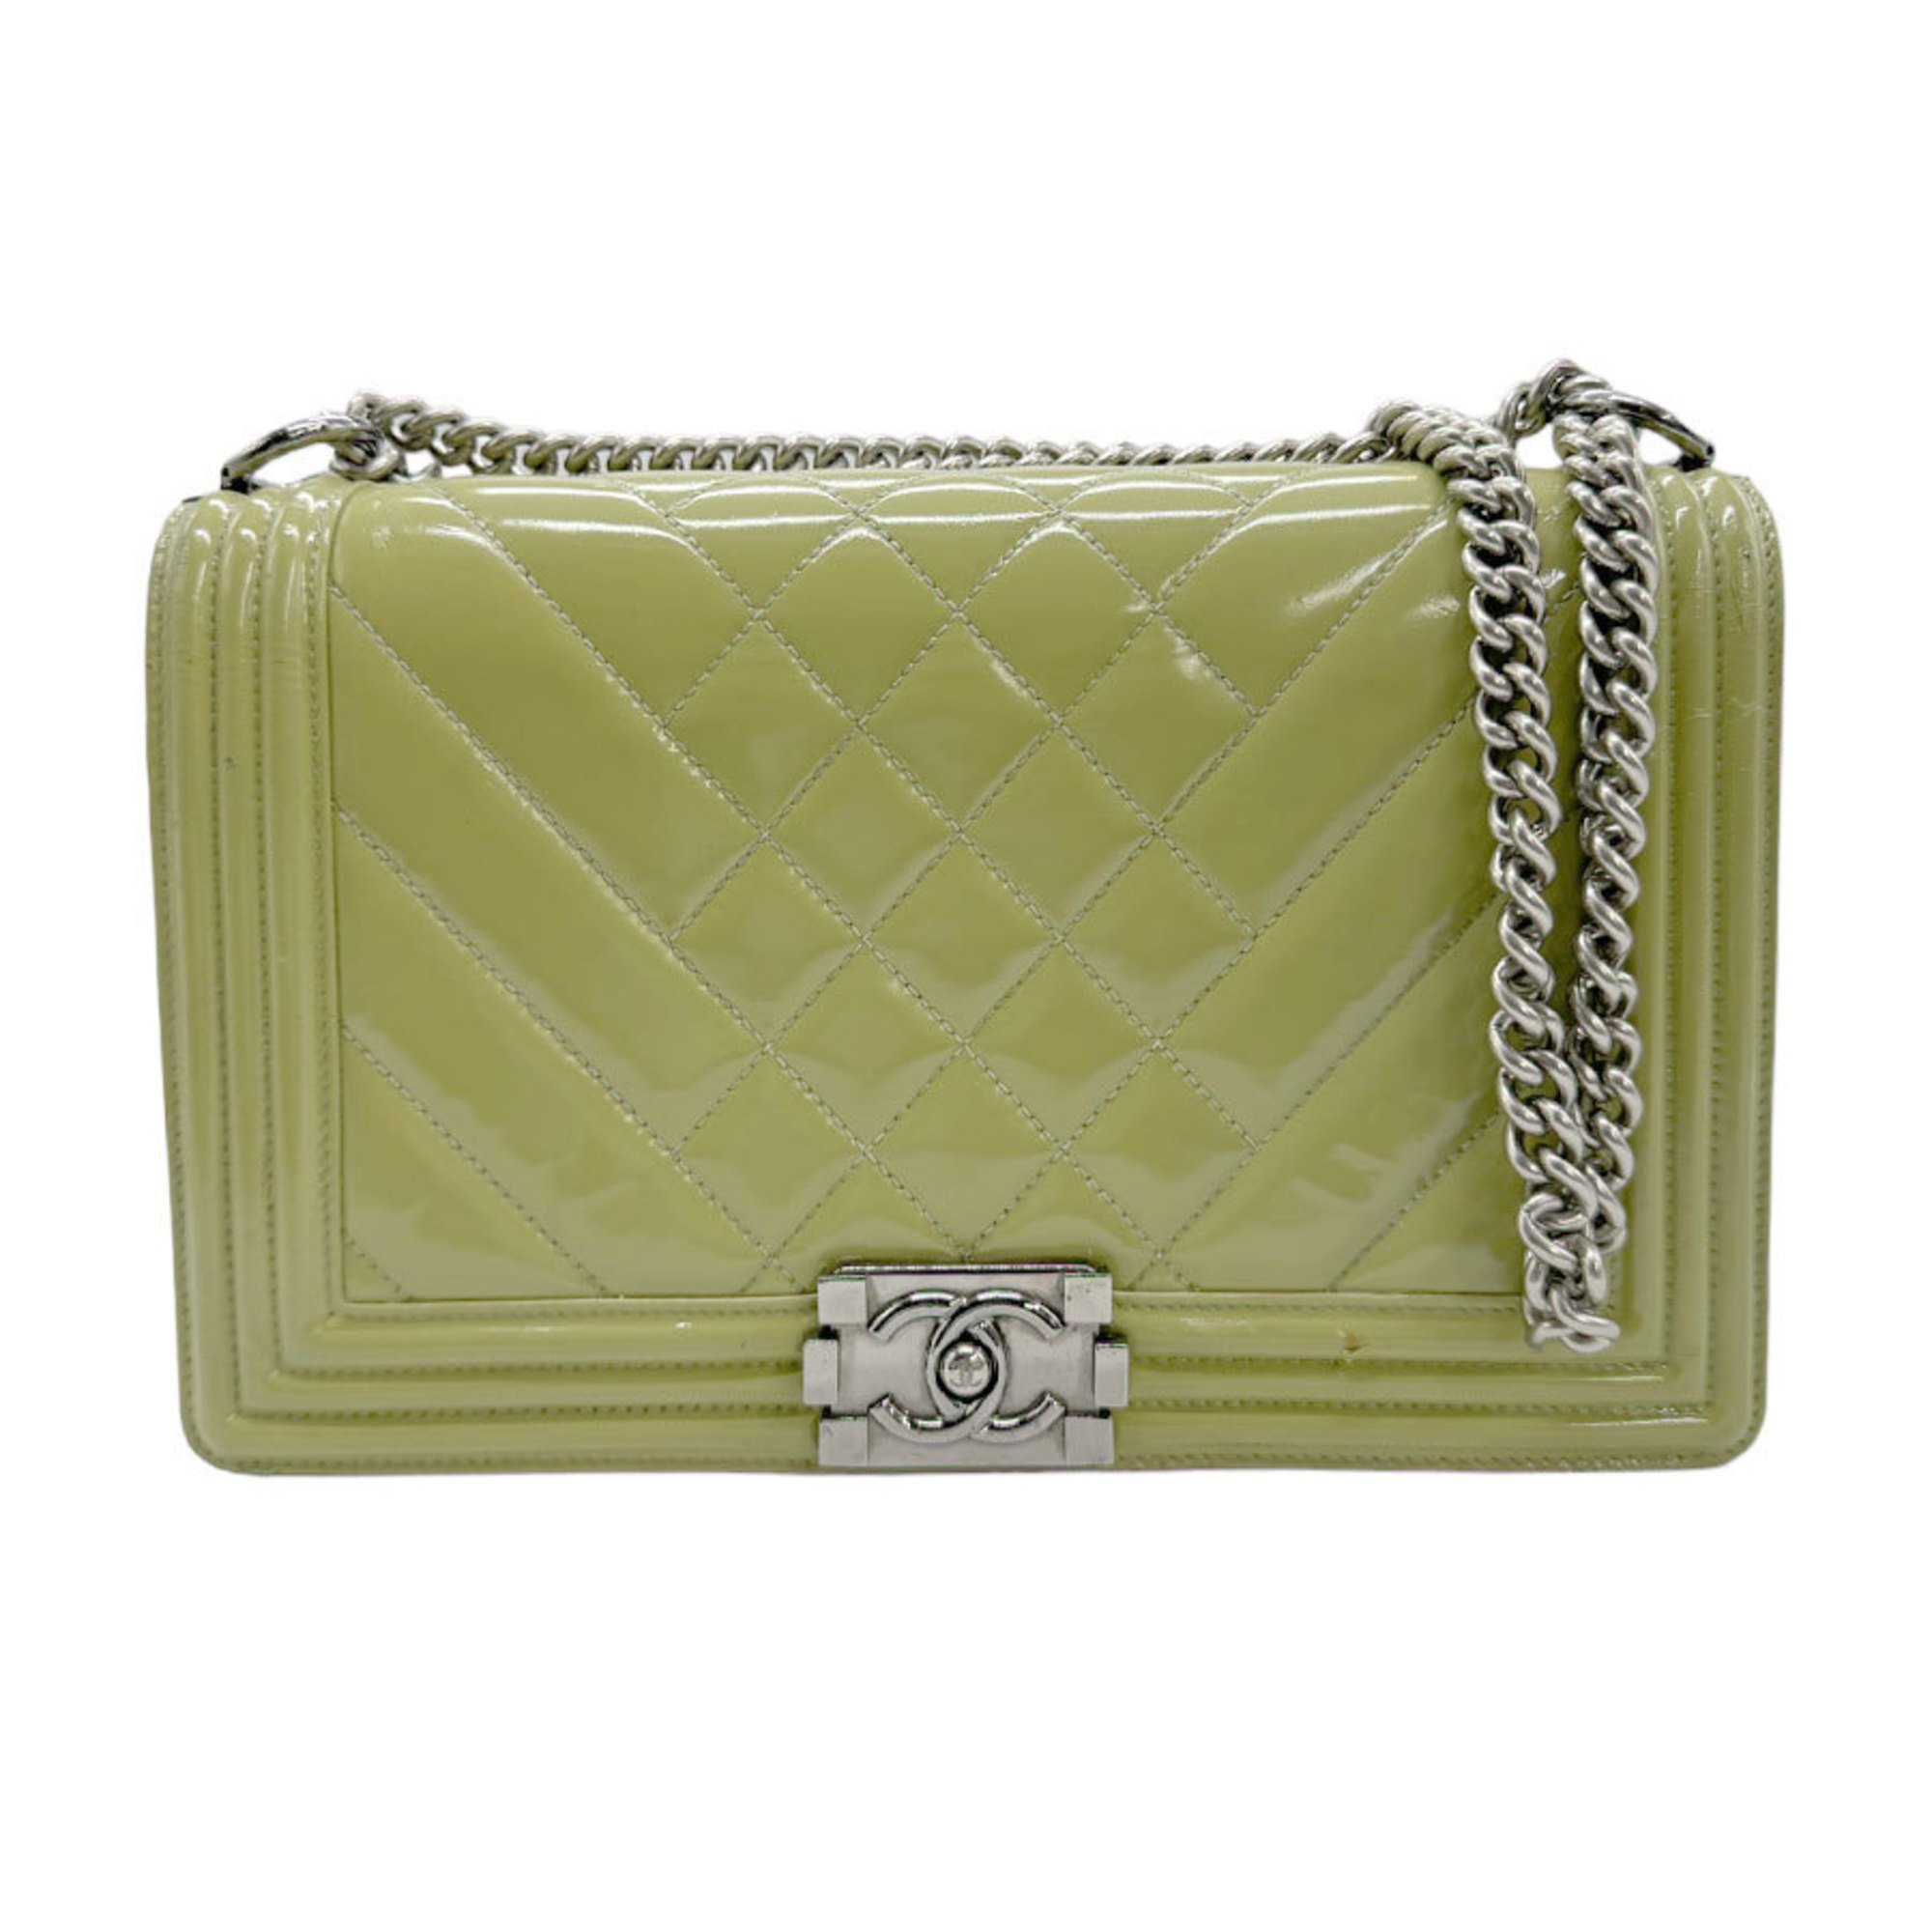 CHANEL Shoulder Bag Boy Chanel Patent Leather Light Green Women's z0946